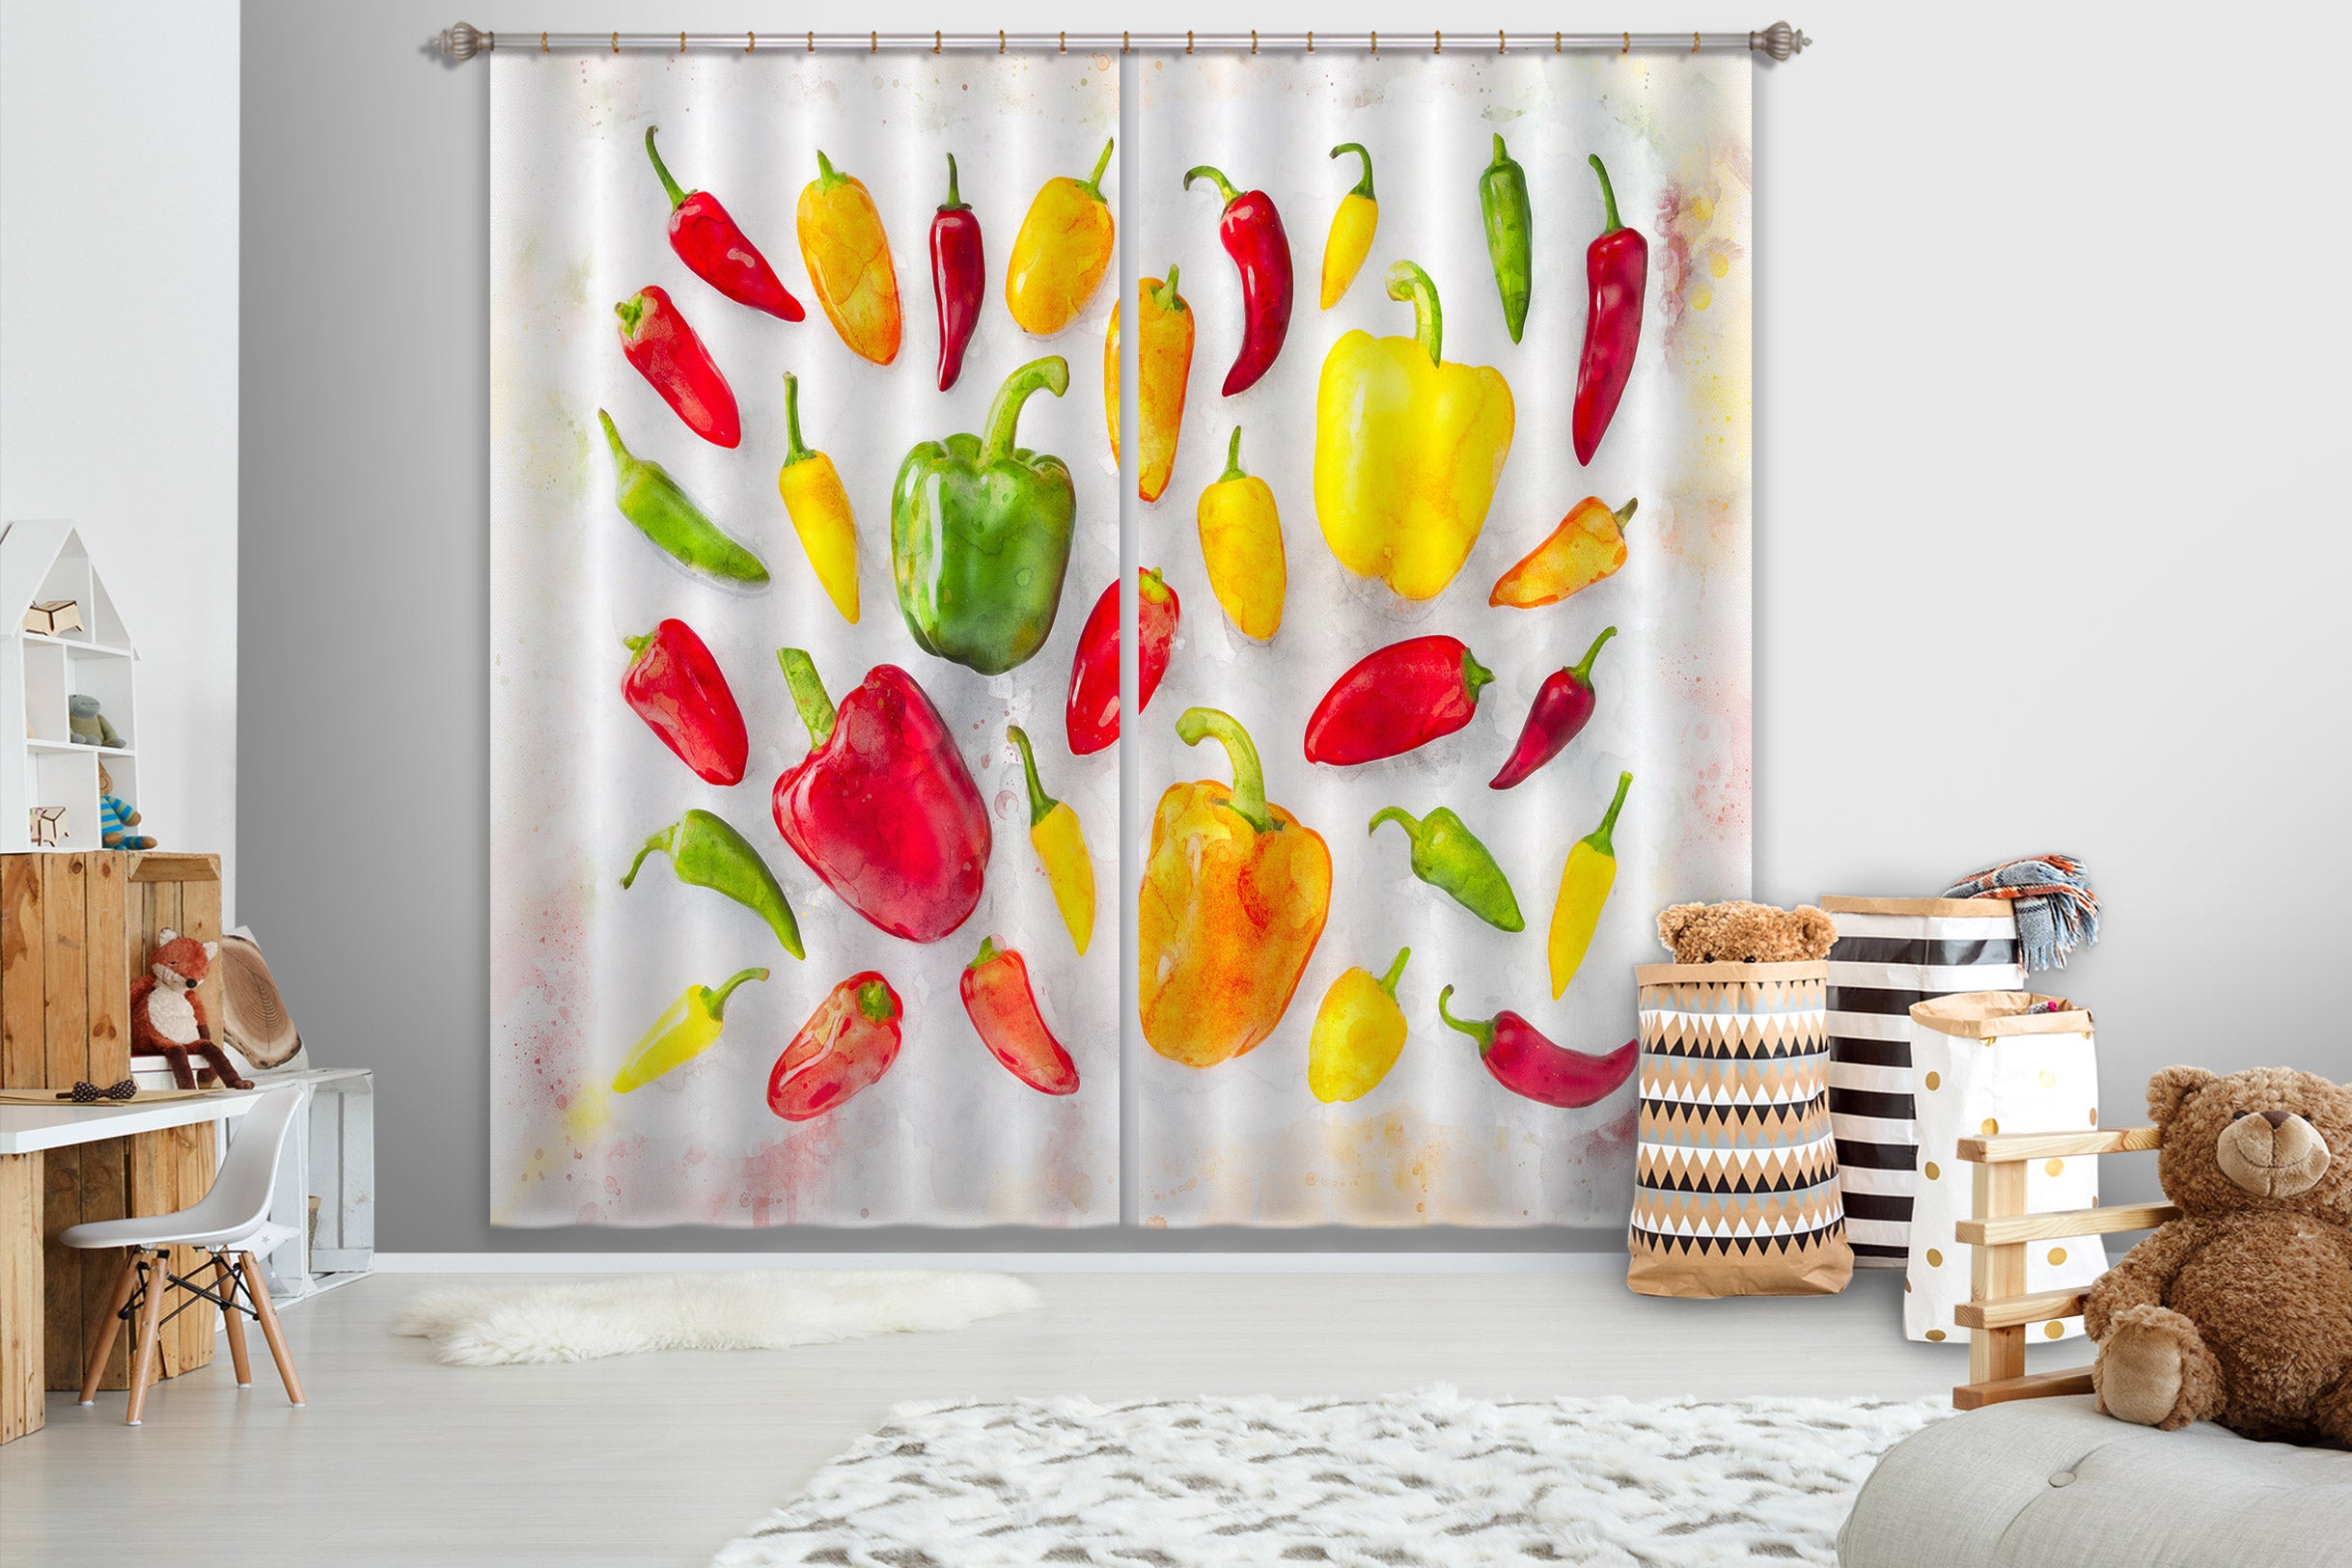 3D Red Pepper 025 Assaf Frank Curtain Curtains Drapes